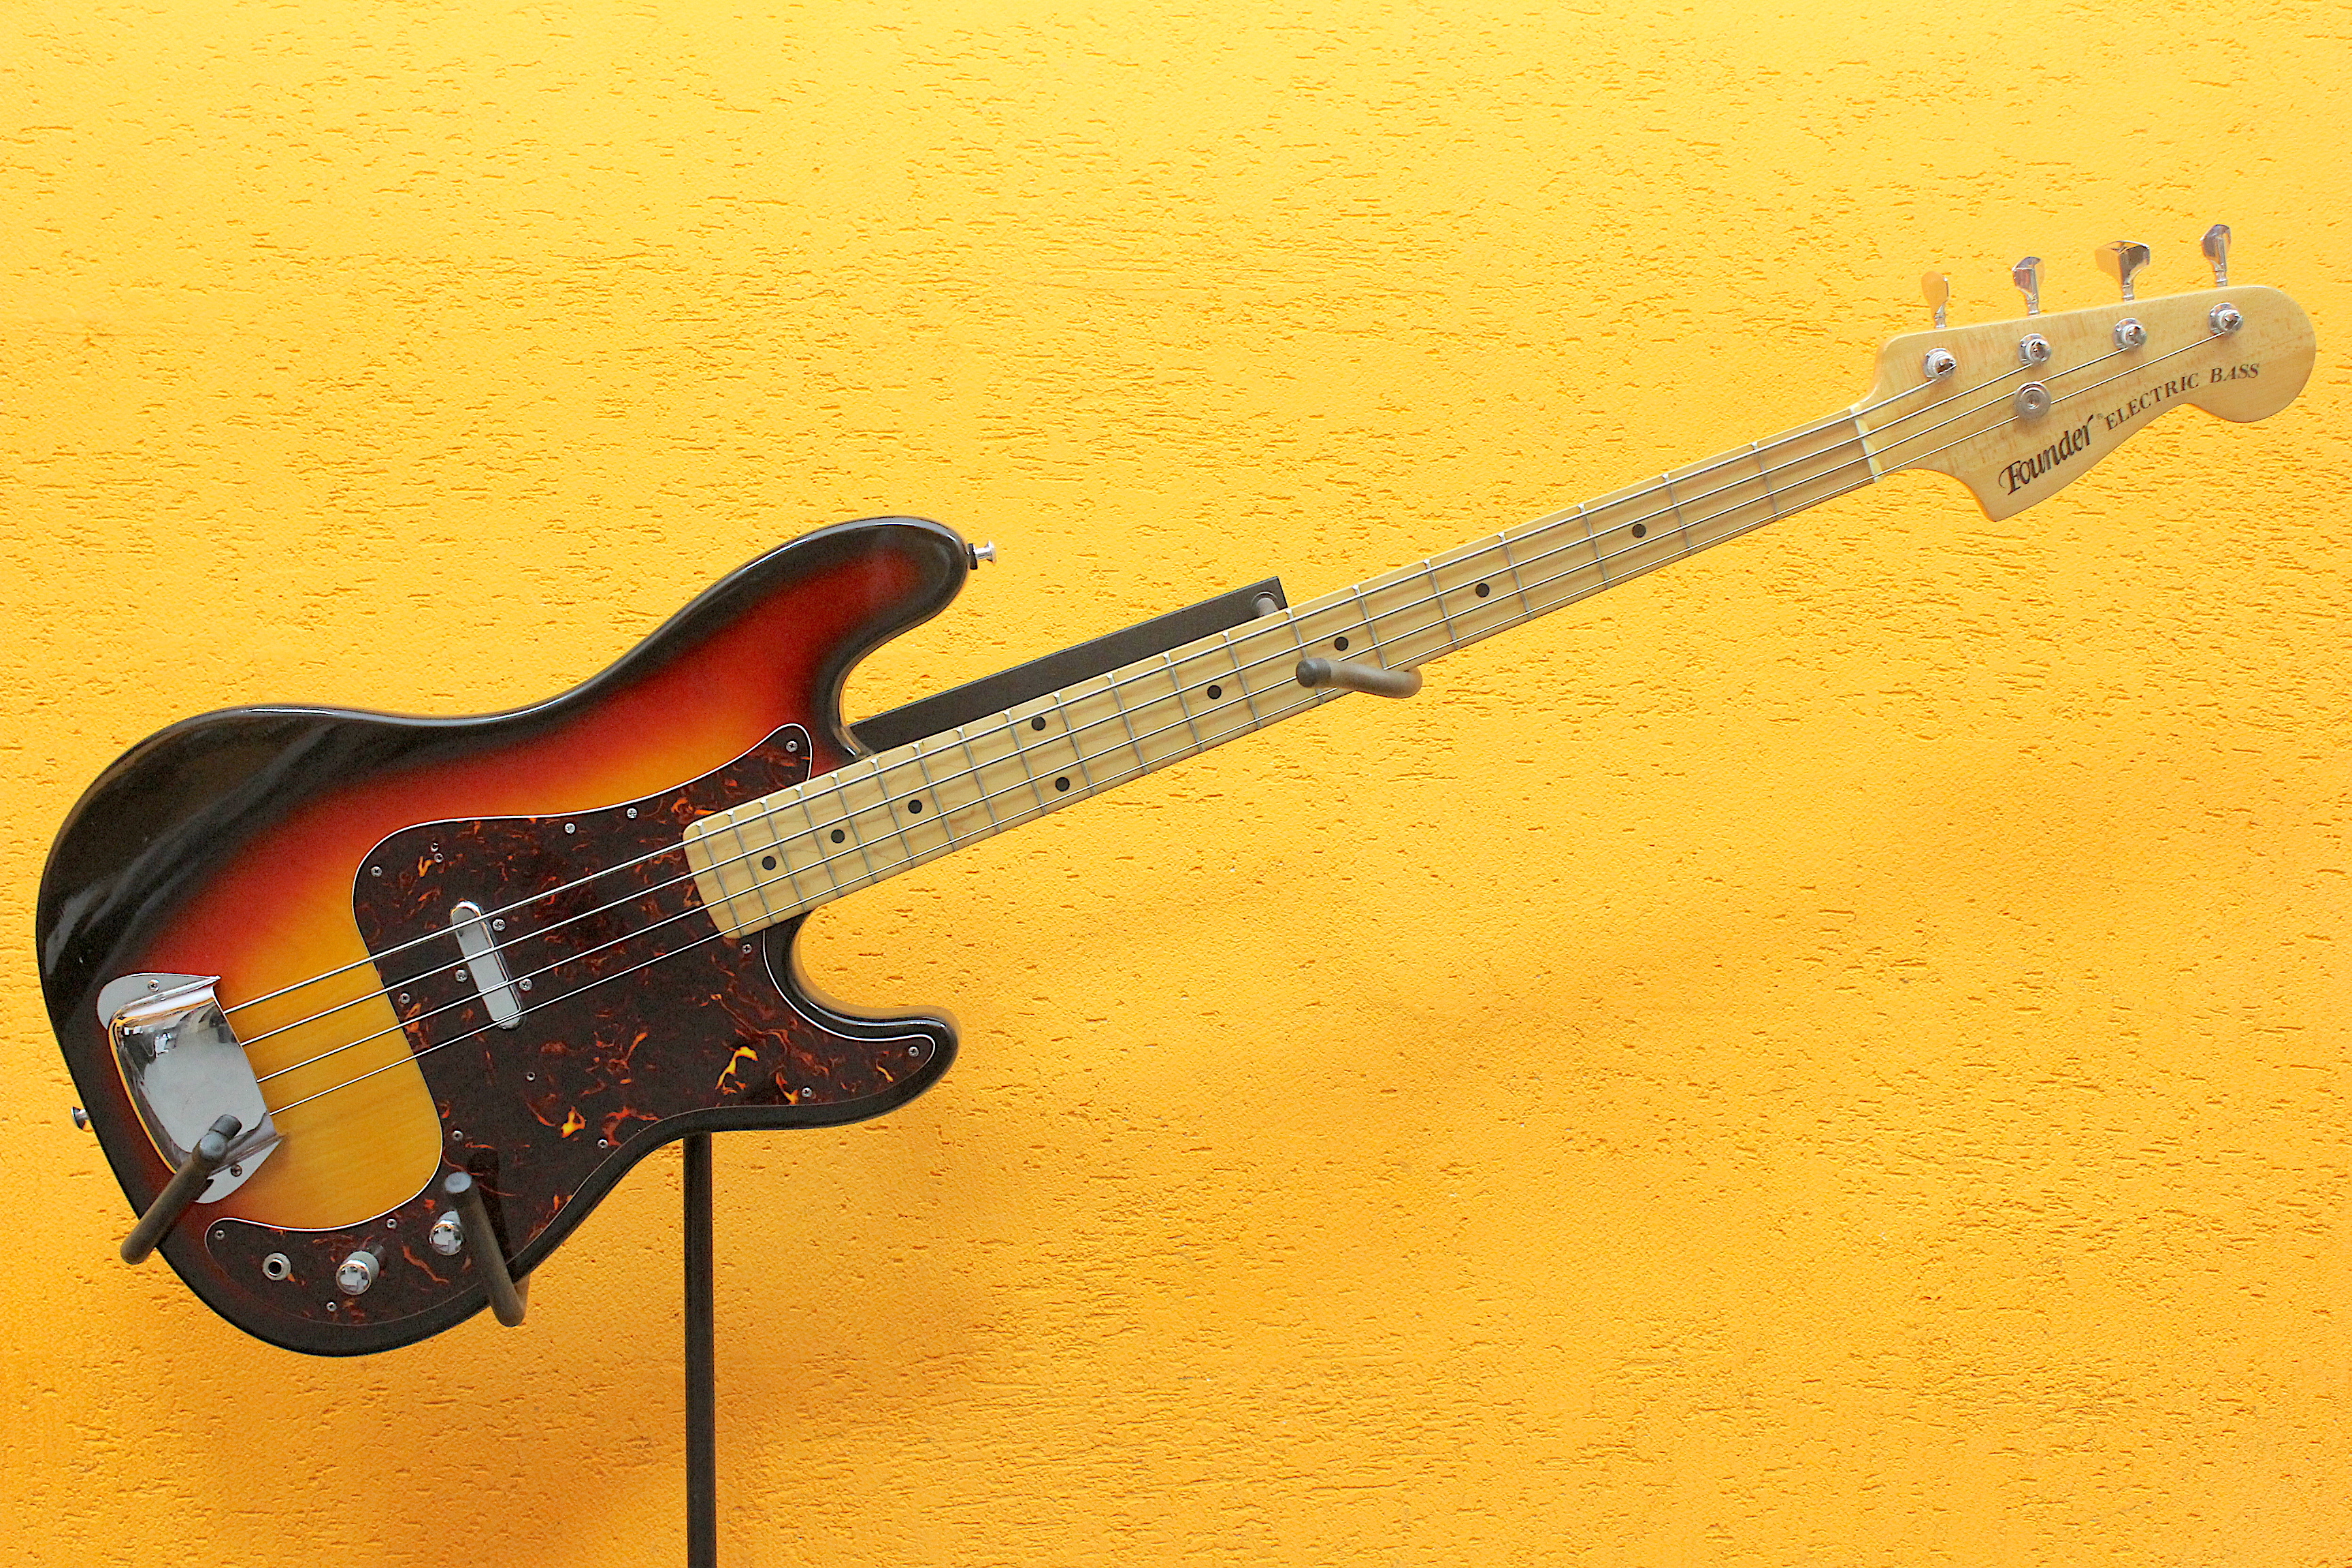 Greco PJB-300 Precision Bass. SX Precision Bass. Precision Bass альтернативный форма. Rockdale Precision Bass.